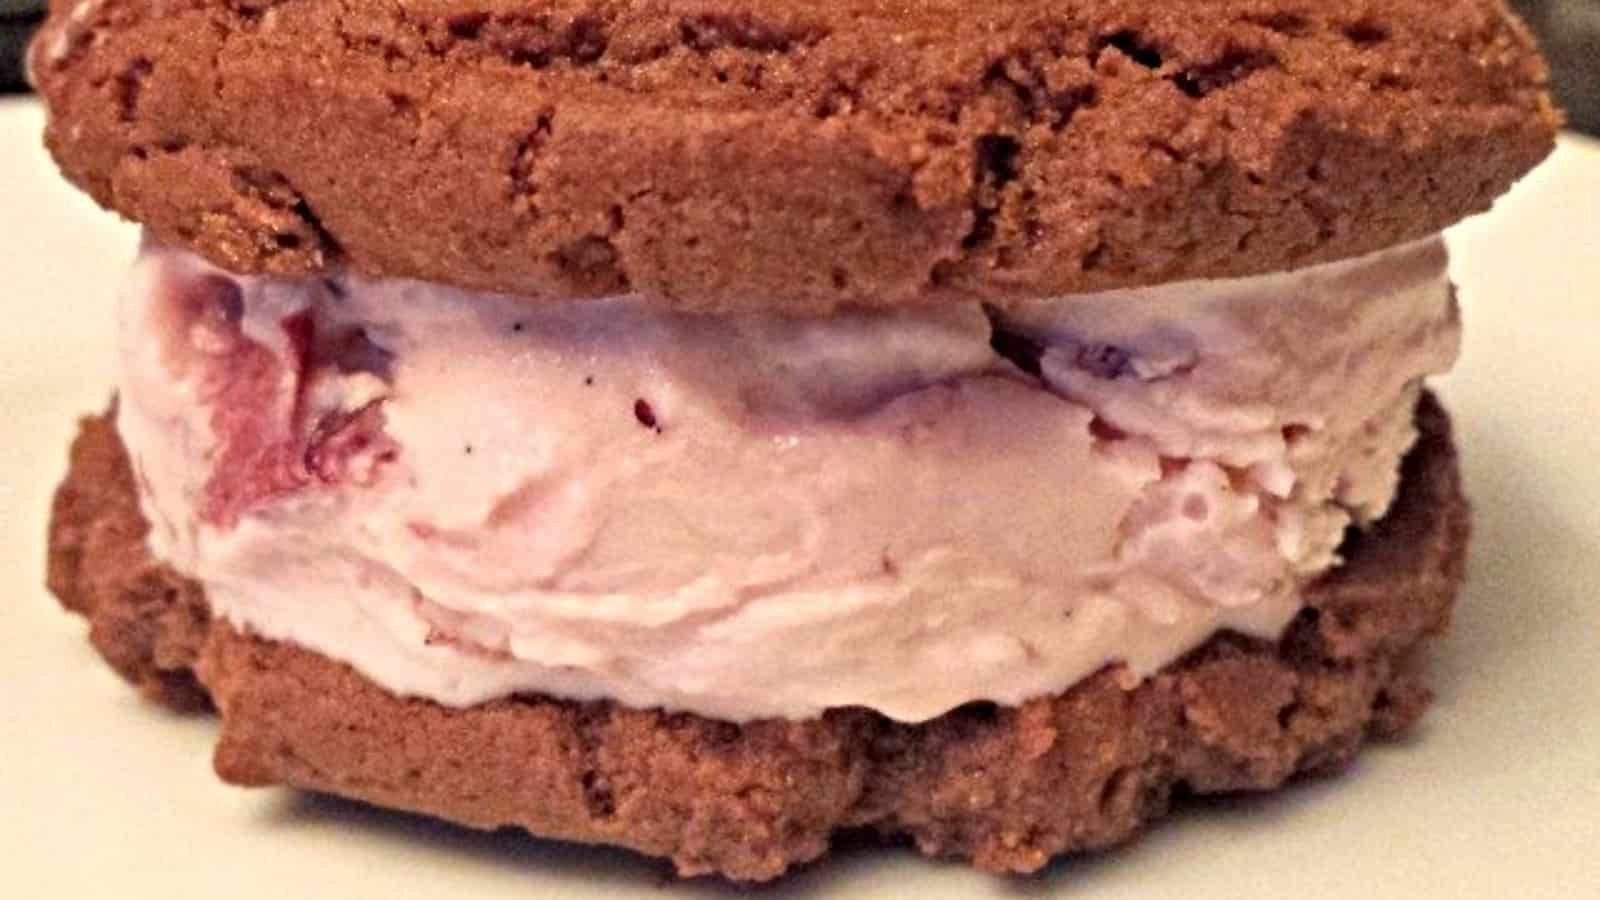 Chocolate cherry ice cream sandwich extreme close up.